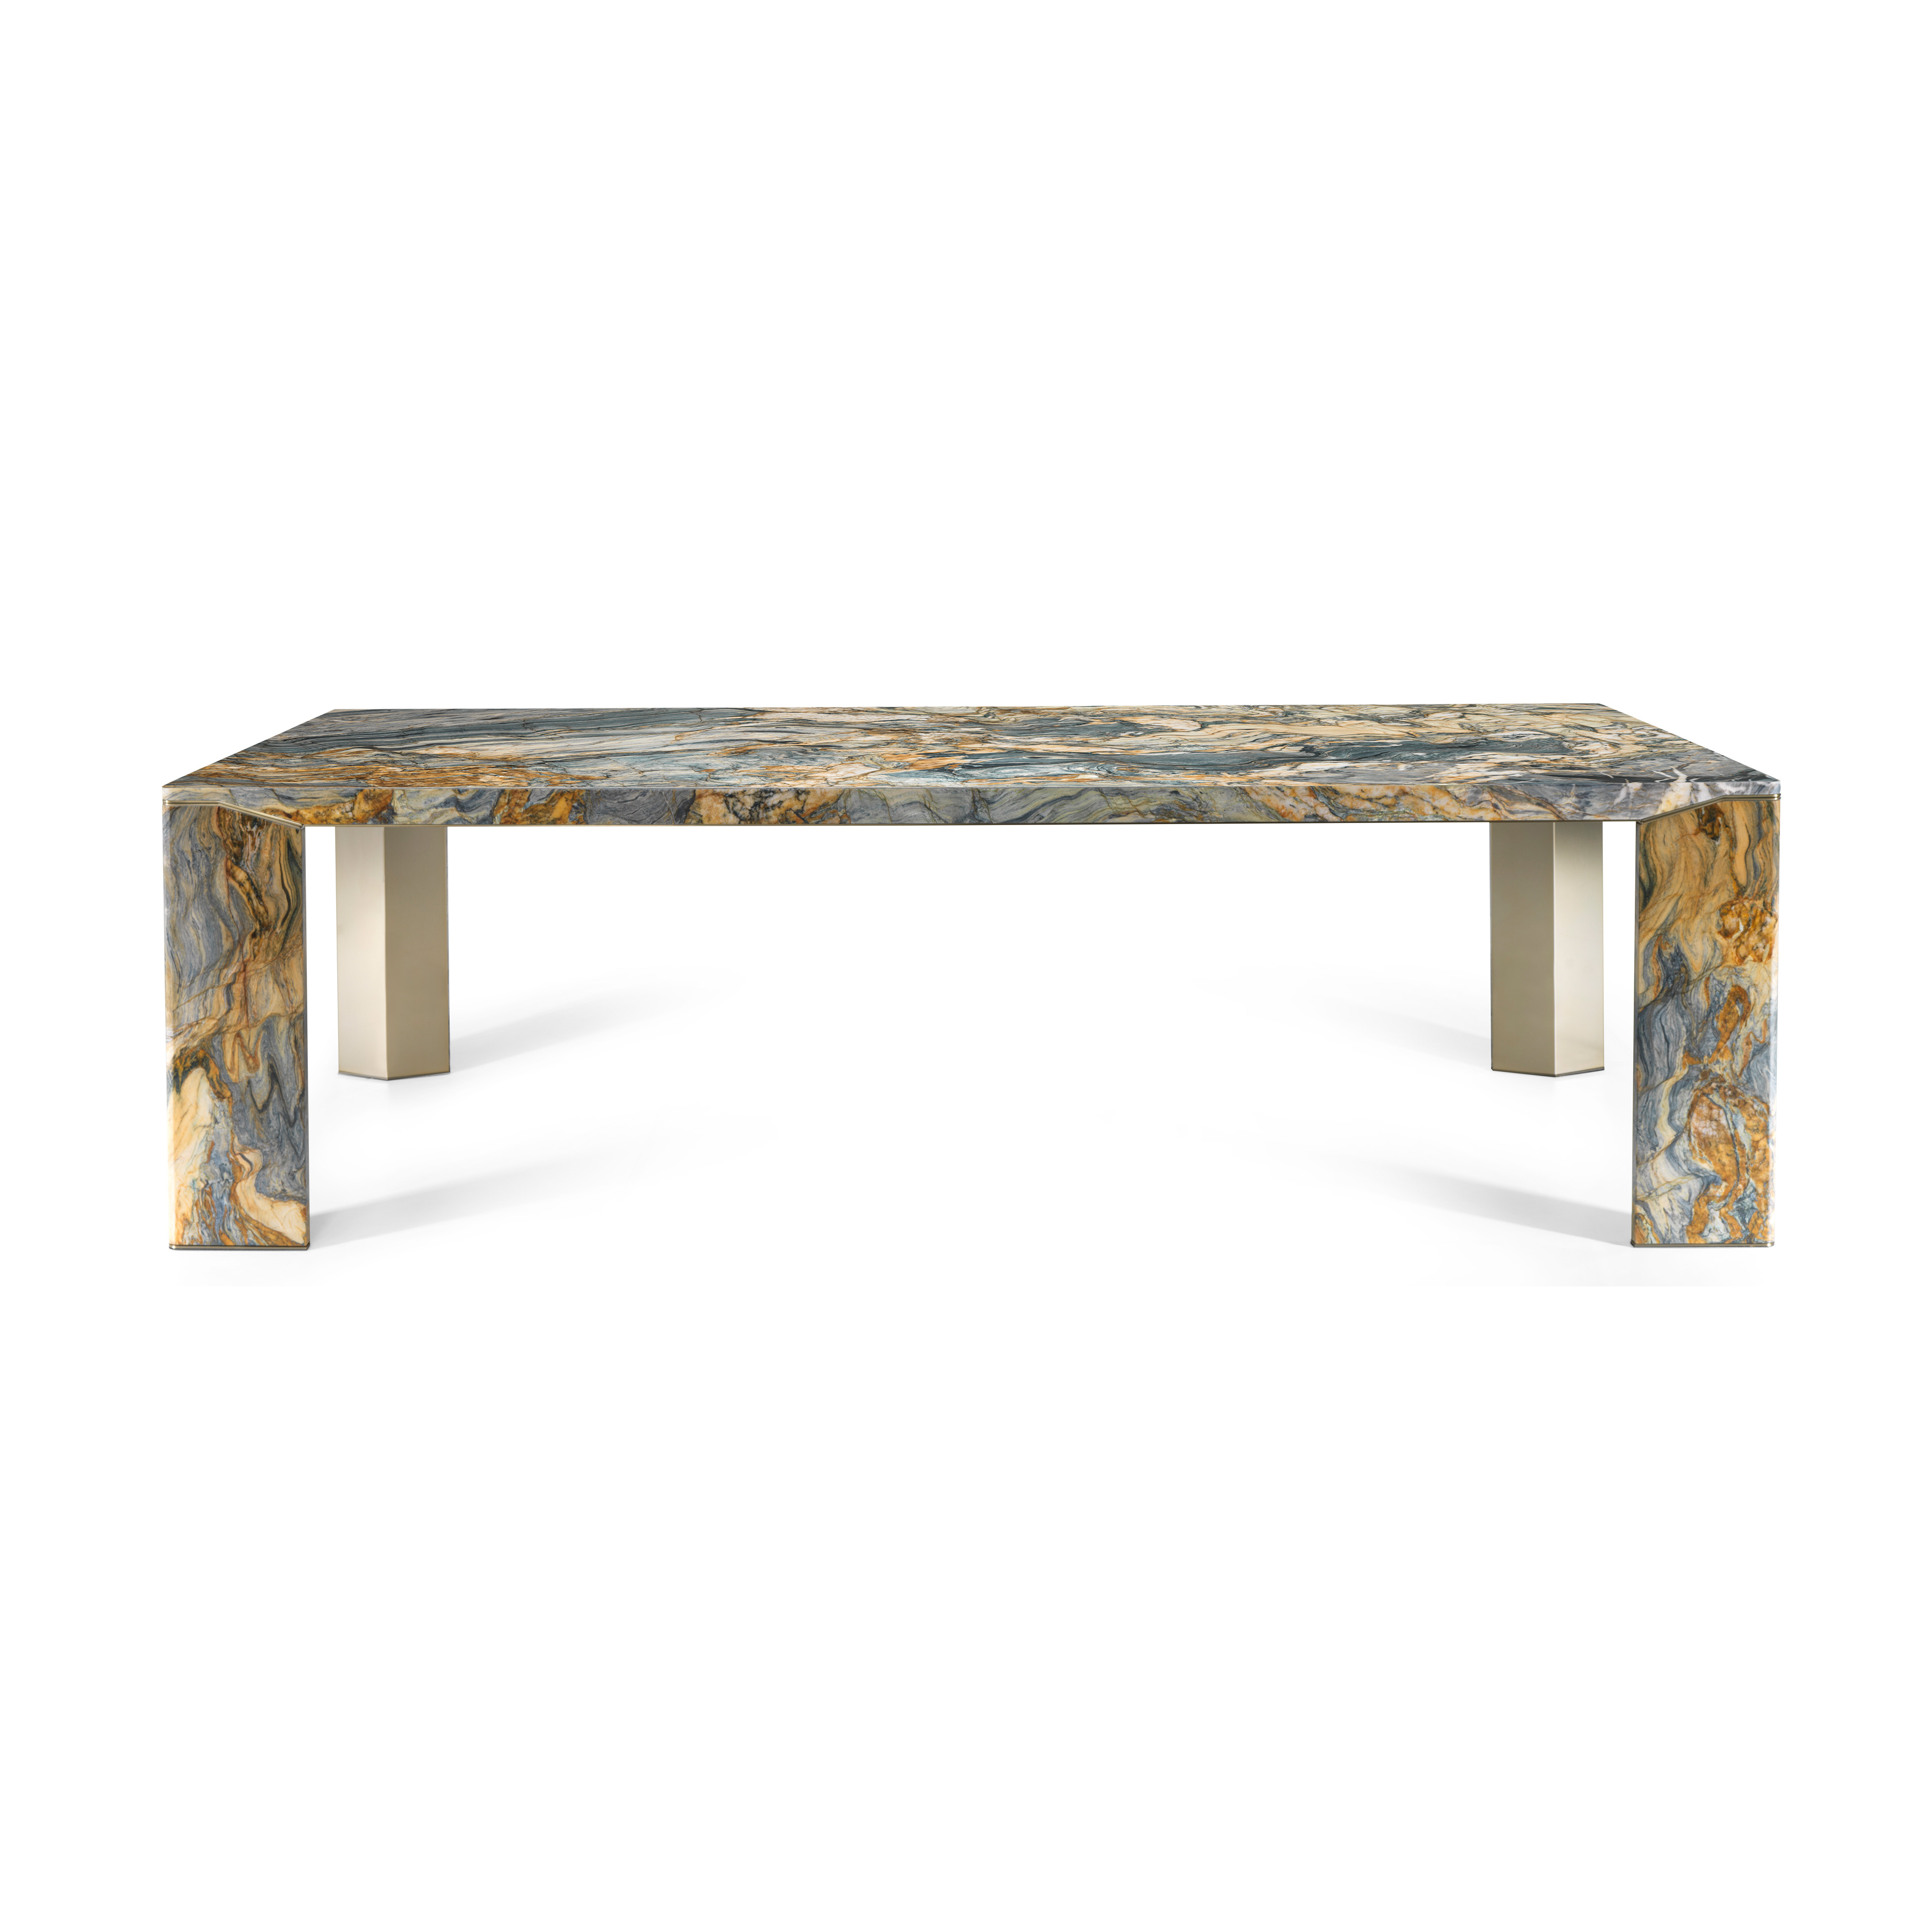 stone-dining-table-gallery-01-jpg